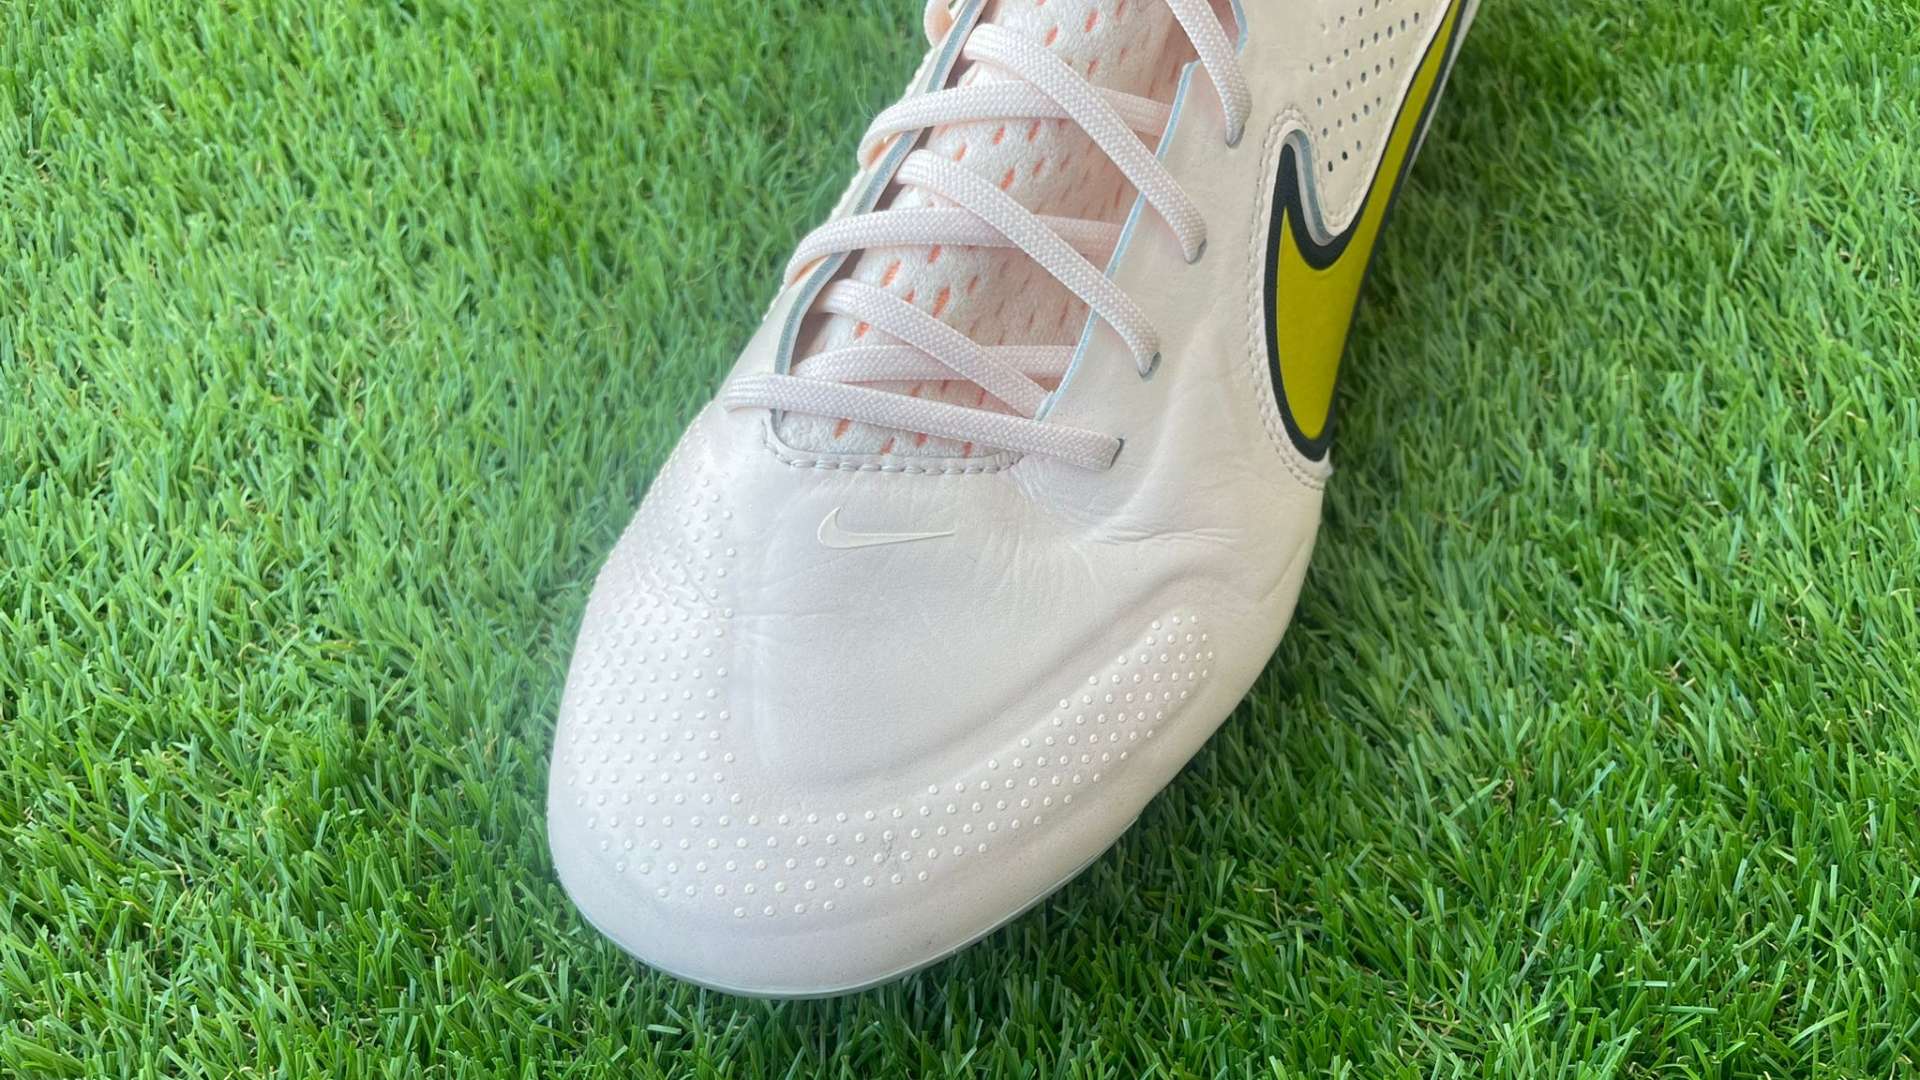 Nike Tiempo Legend Elite FG Boots - closer look